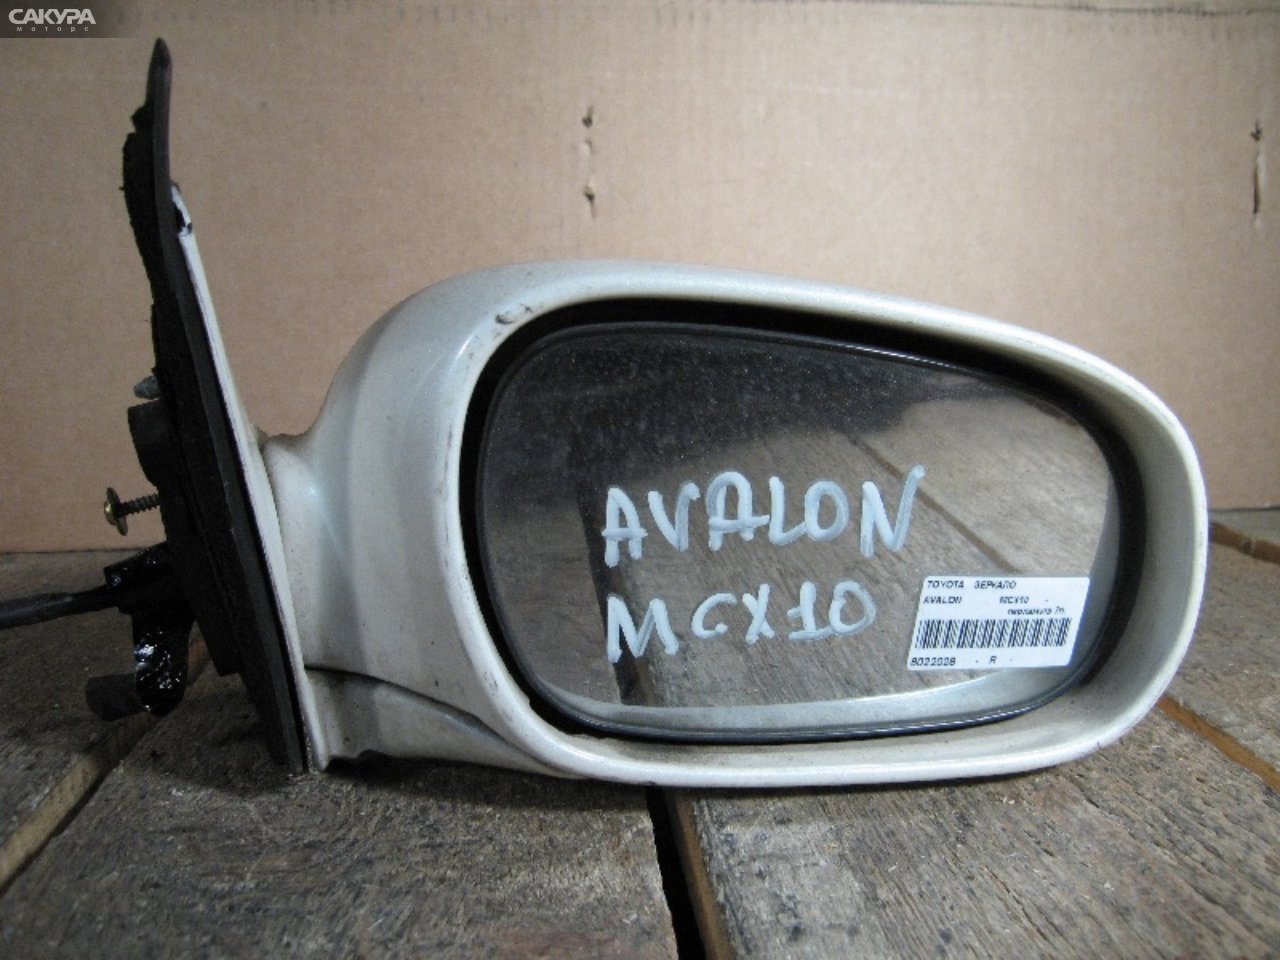 Зеркало боковое правое Toyota Avalon MCX10: купить в Сакура Абакан.